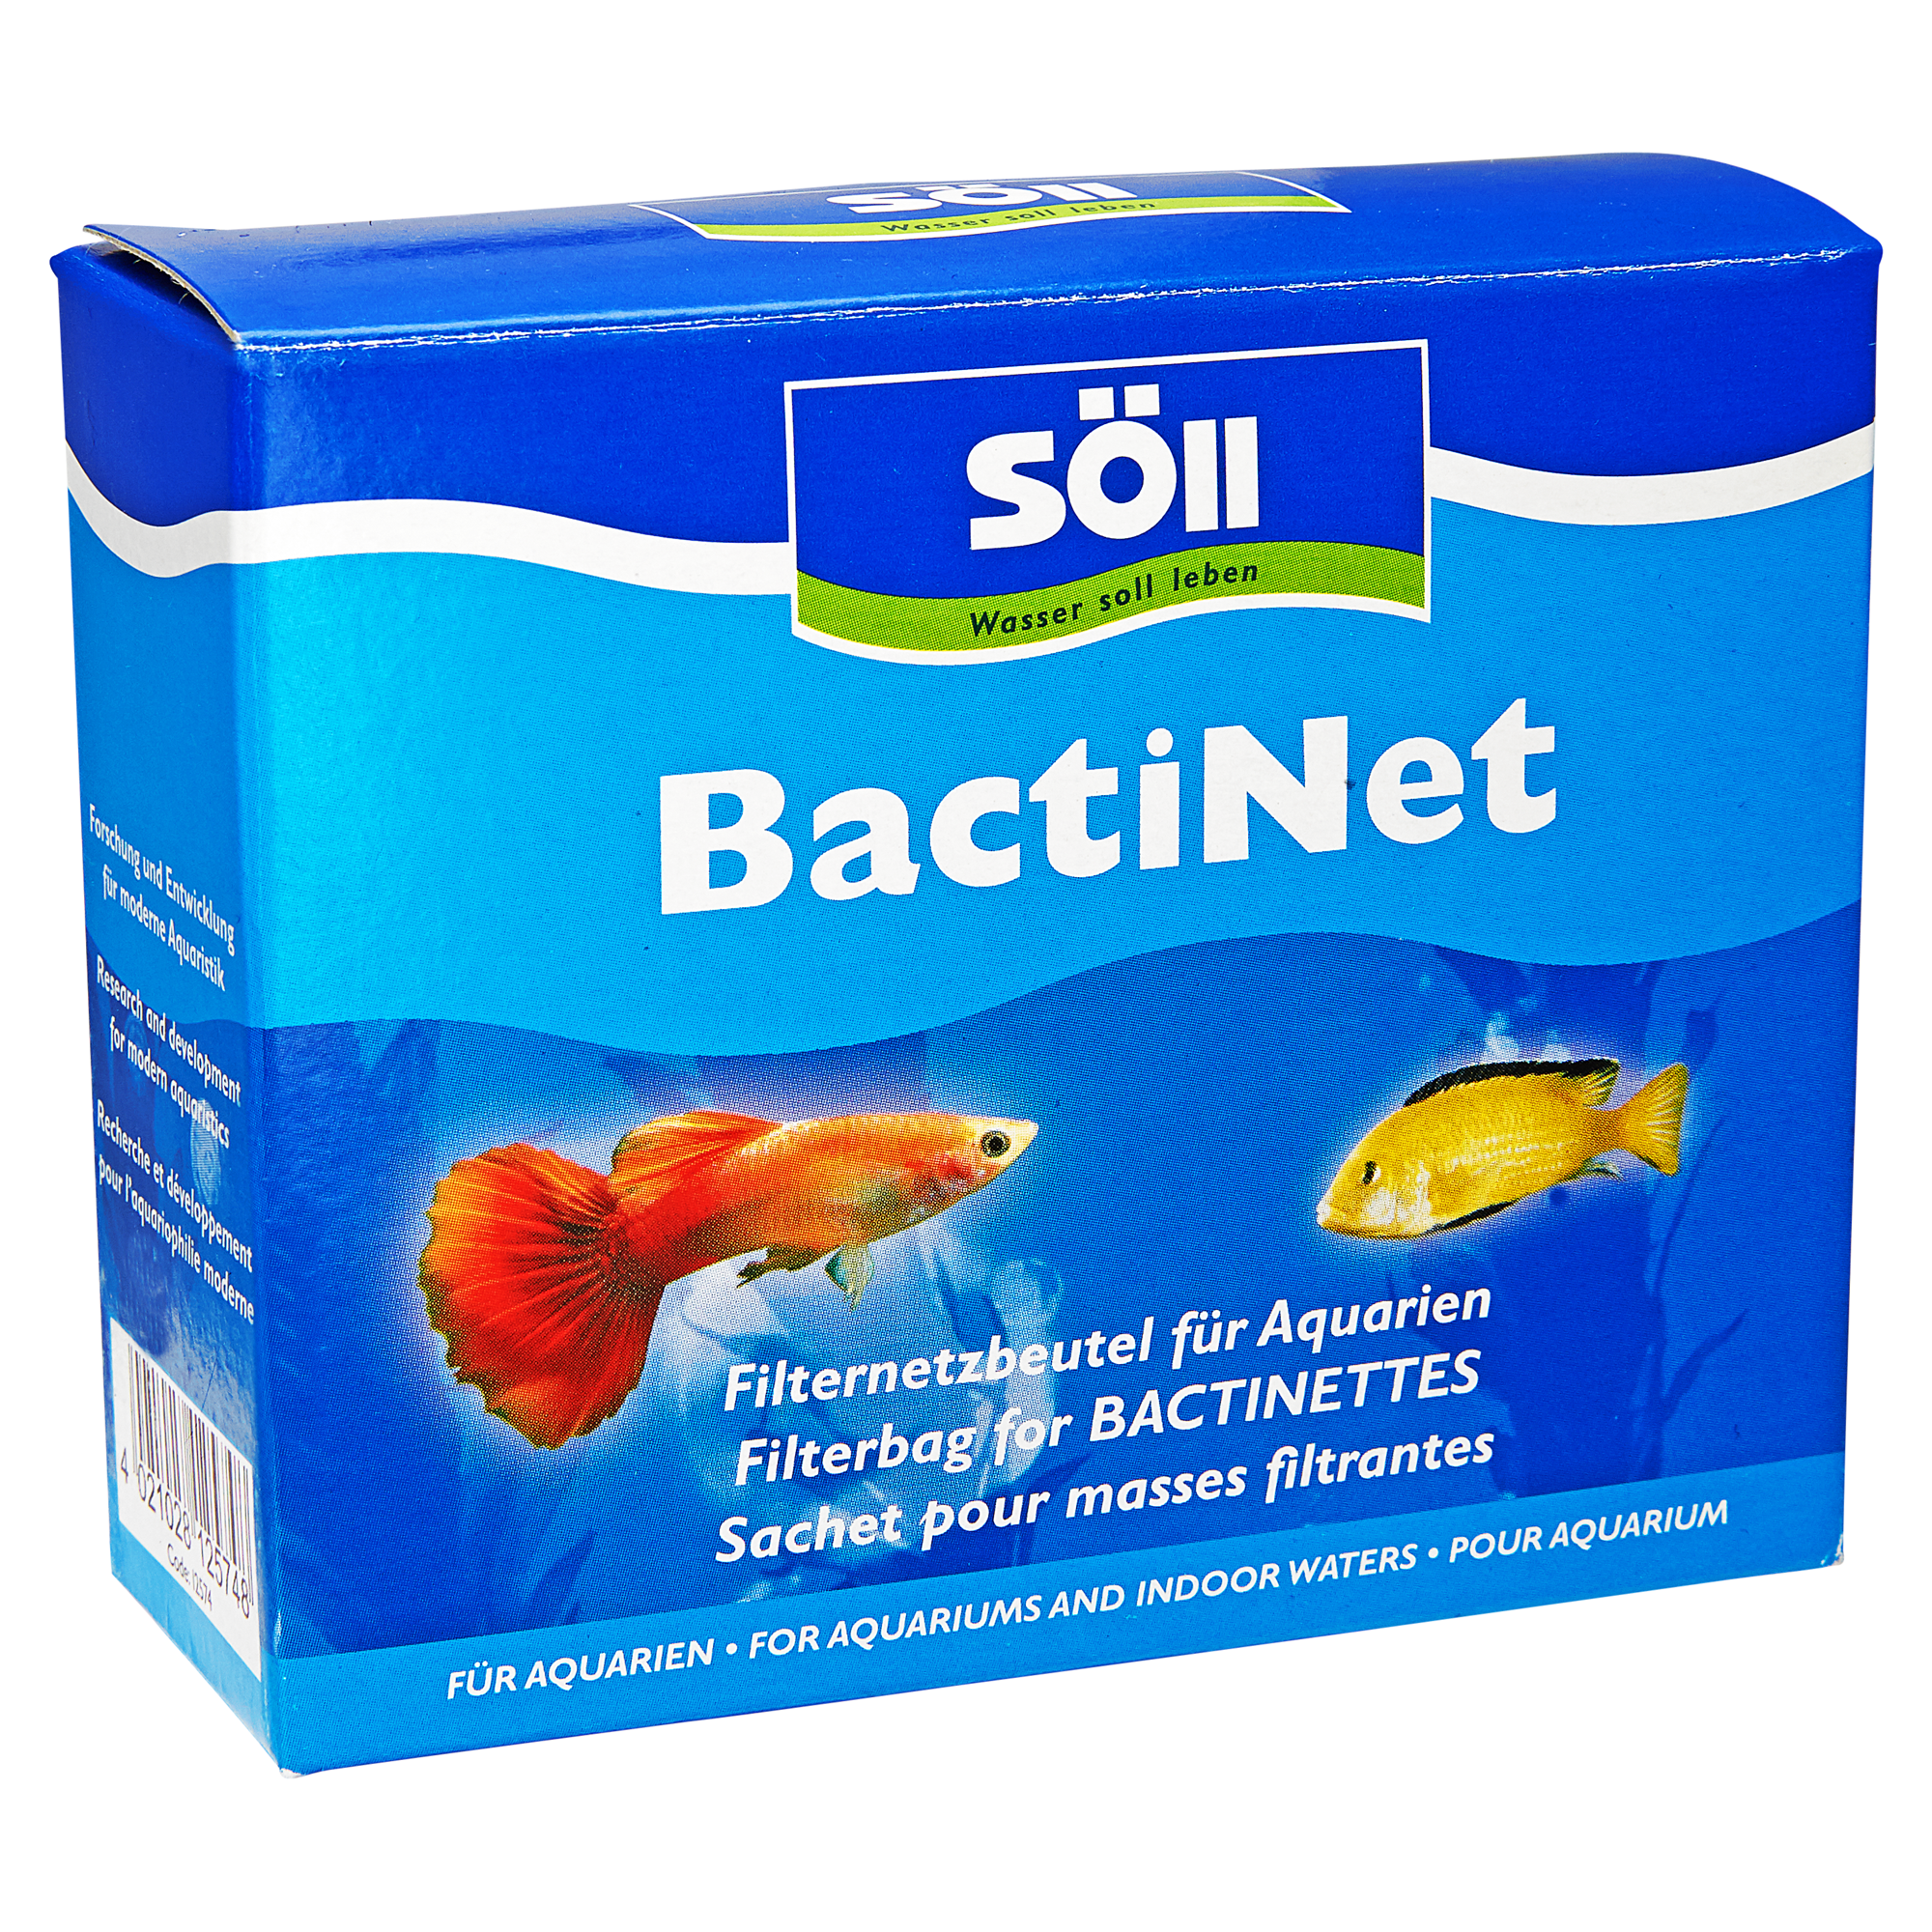 Filternetzbeutel BactiNet 2 Stück + product picture